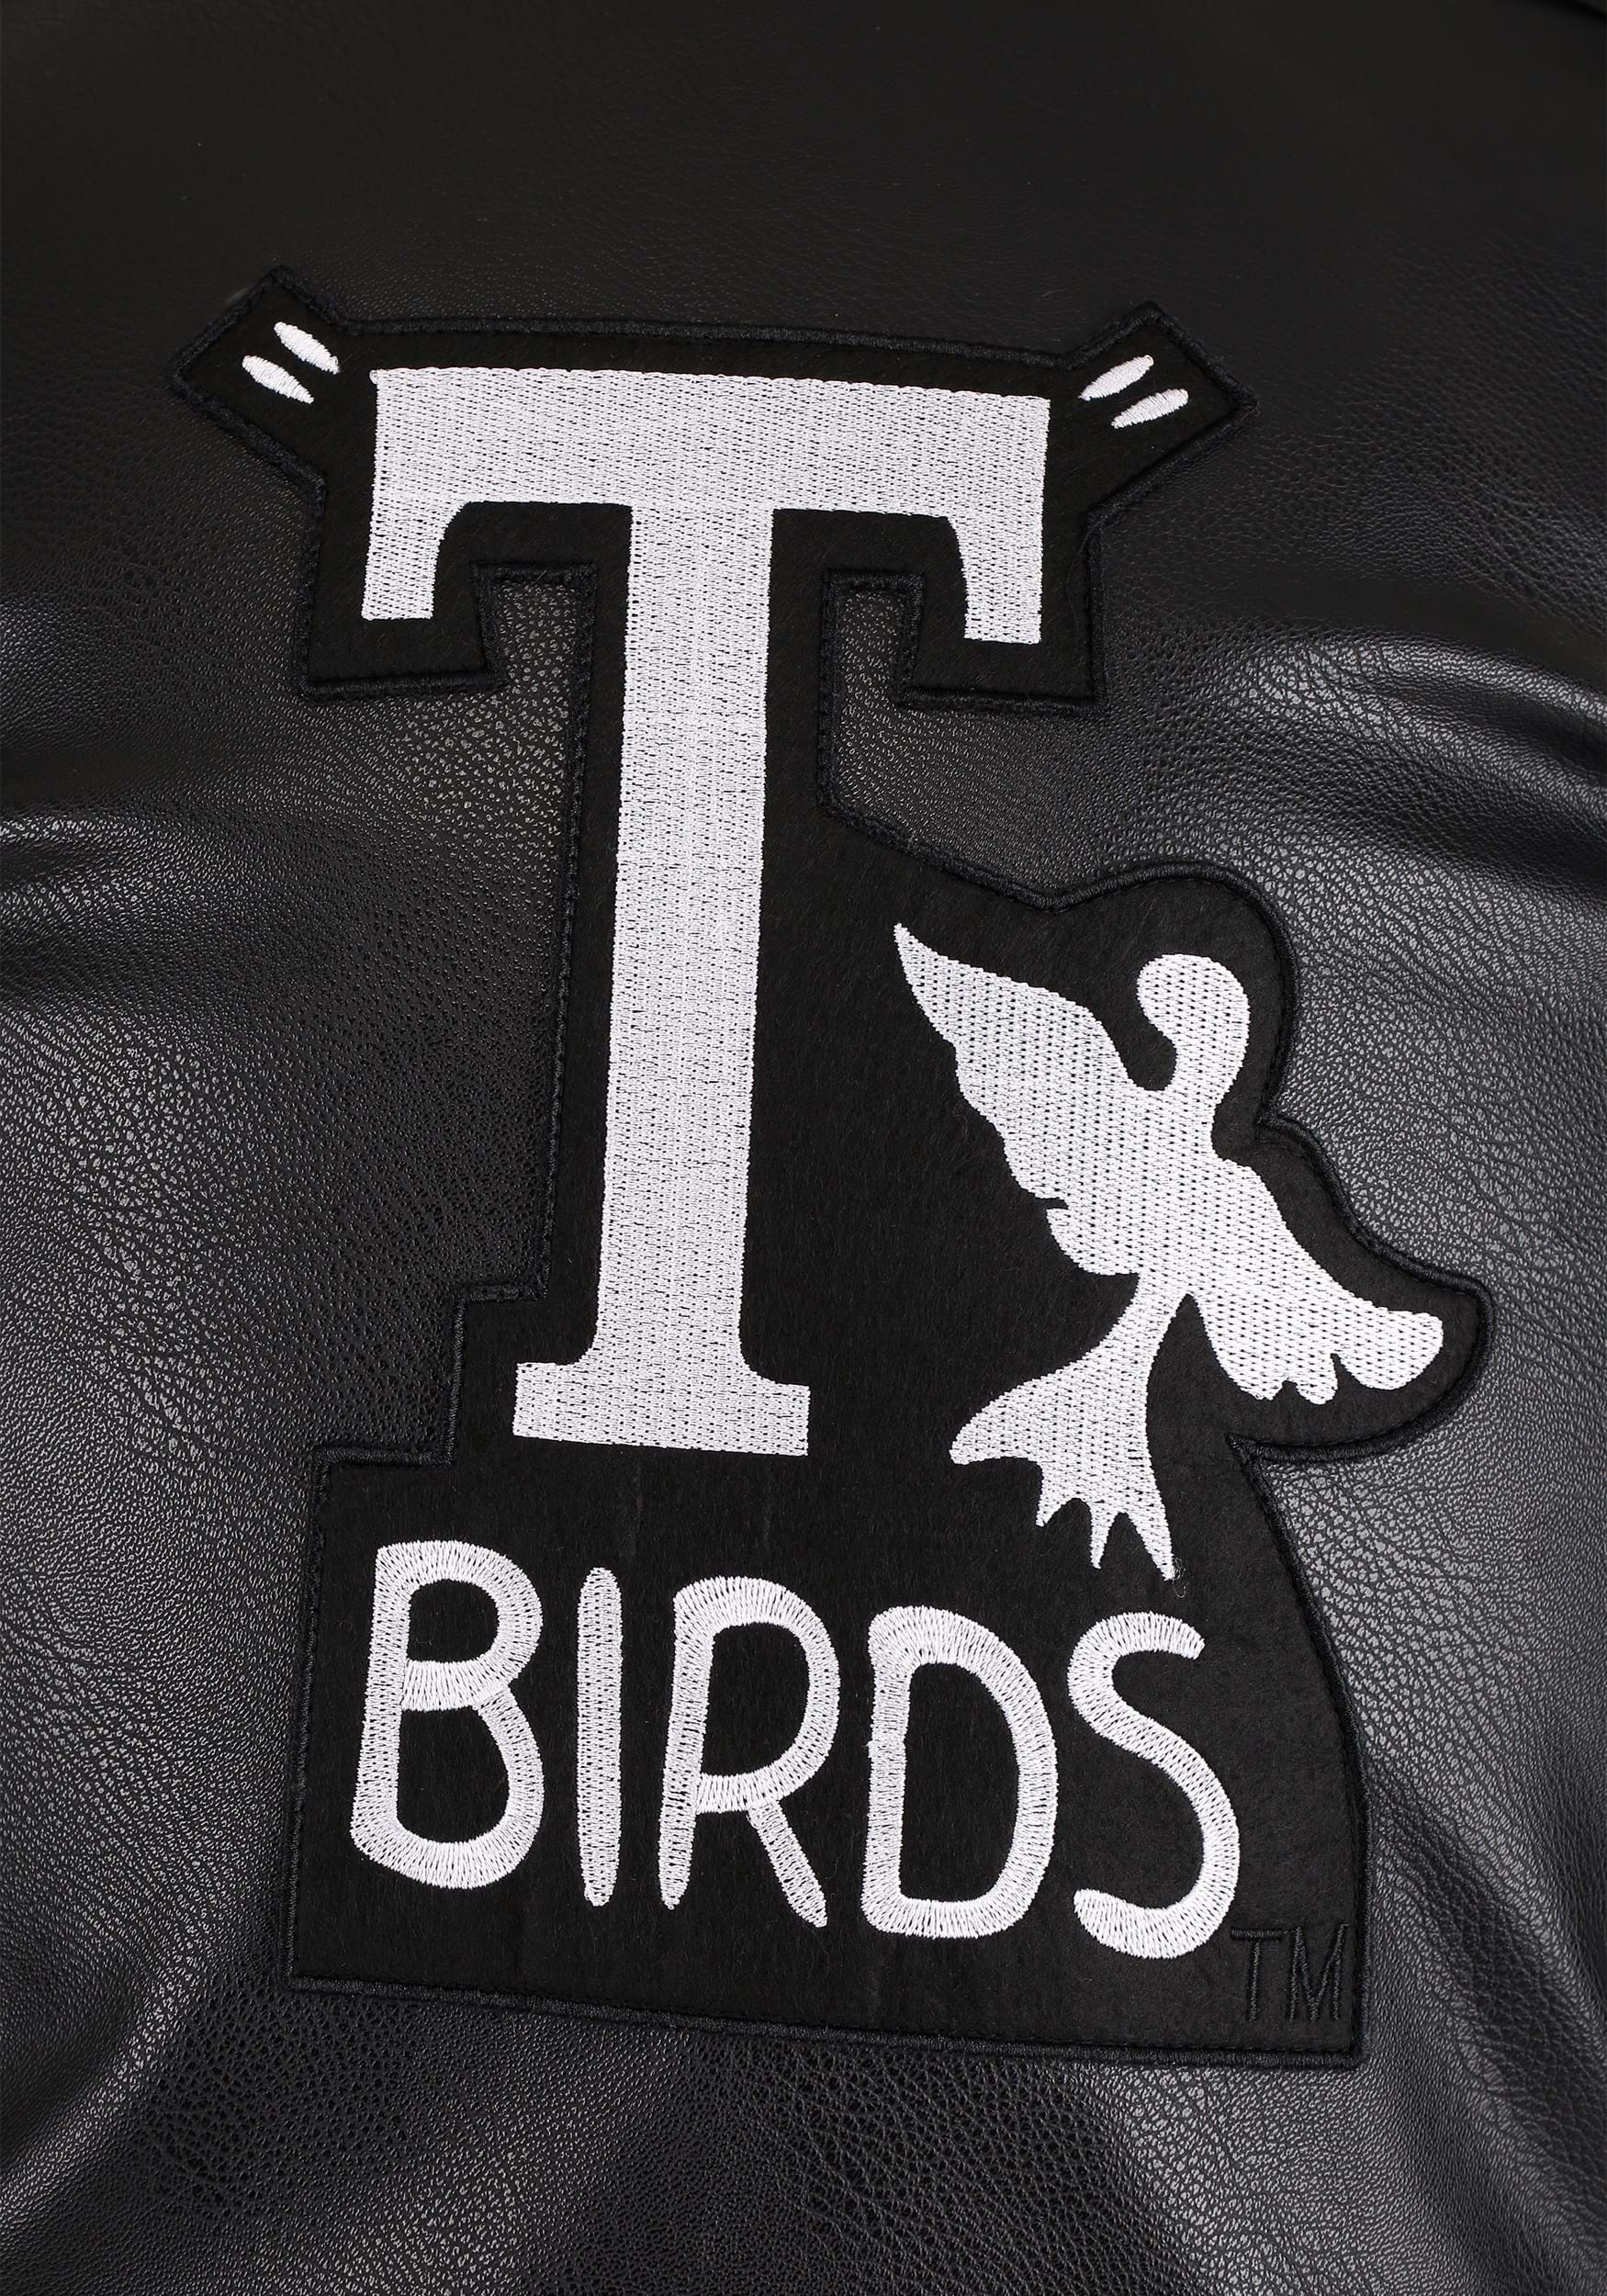 T-birds Iron on T-shirt Transfer Grease Jacket T-bird John